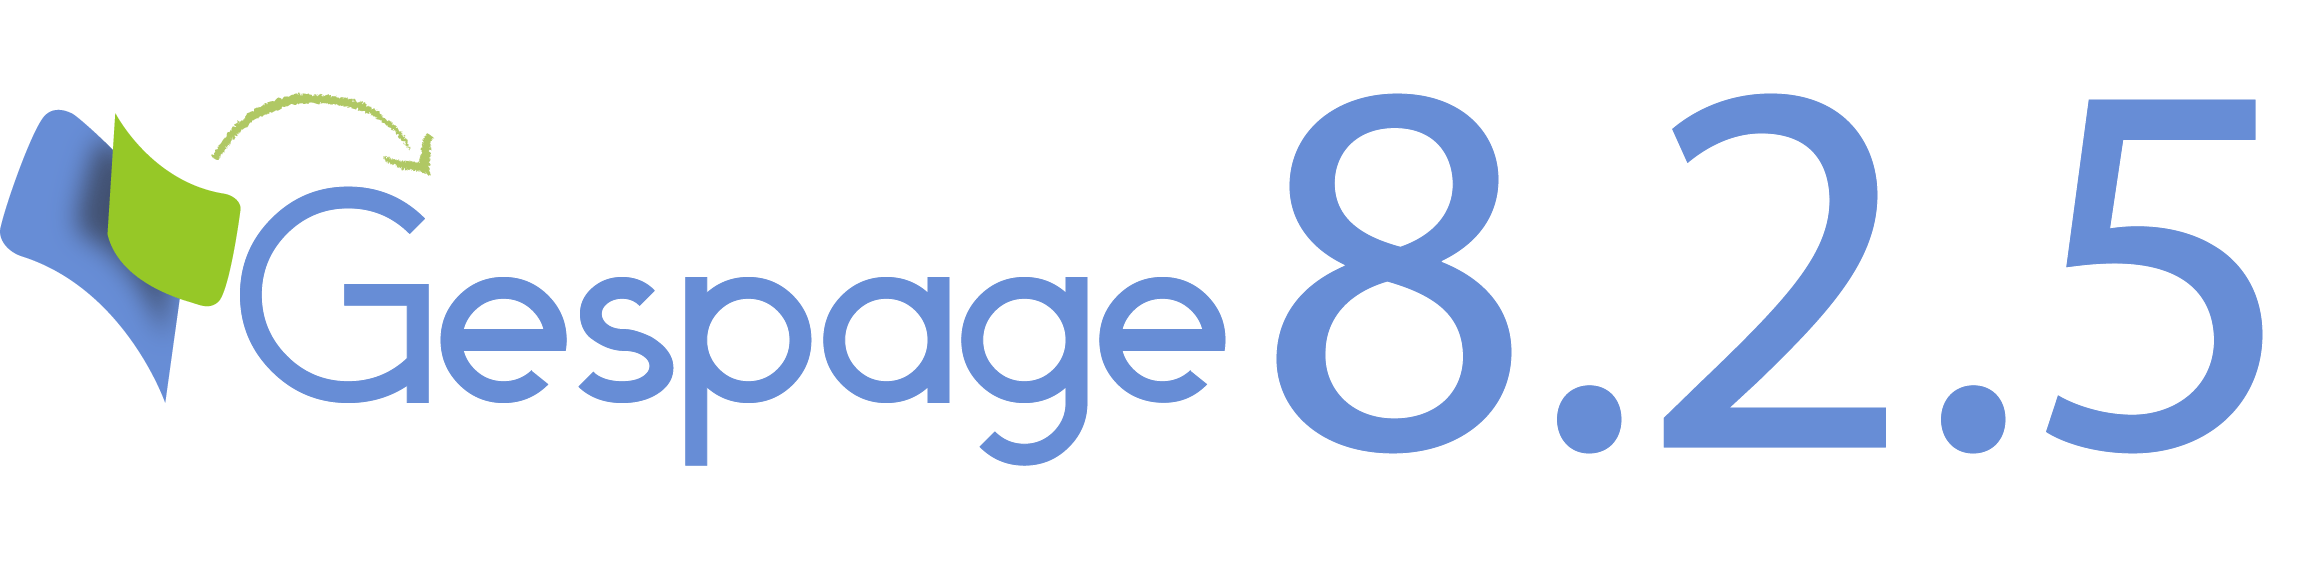 New version 8.2.5 of Gespage 3 • Gespage